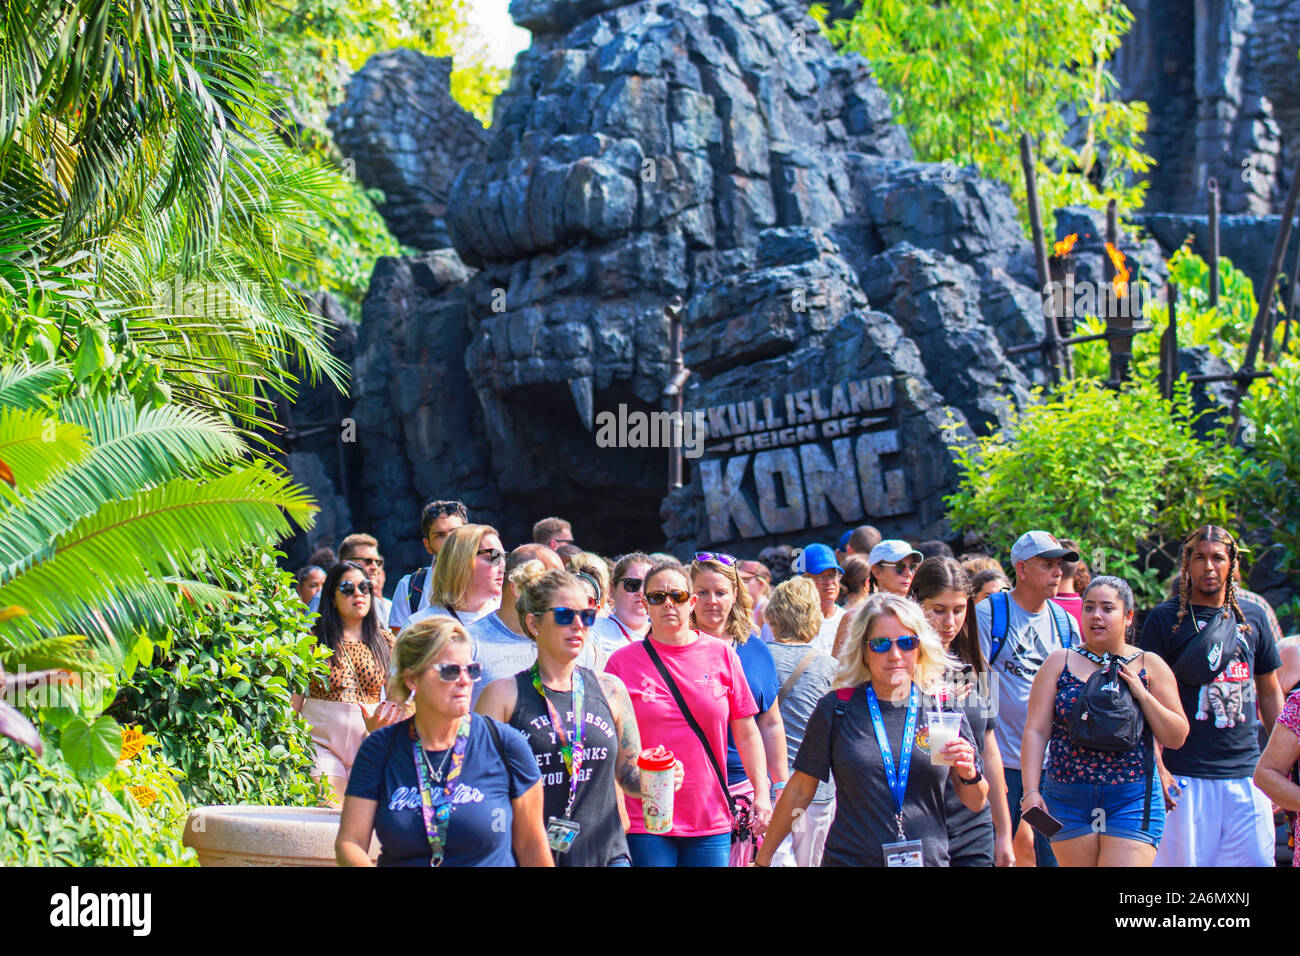 Skull Island Reign of Kong entrance to Ride, People, Islands of Adventure, Universal Studios Resort, Orlando, Florida, USA Stock Photo